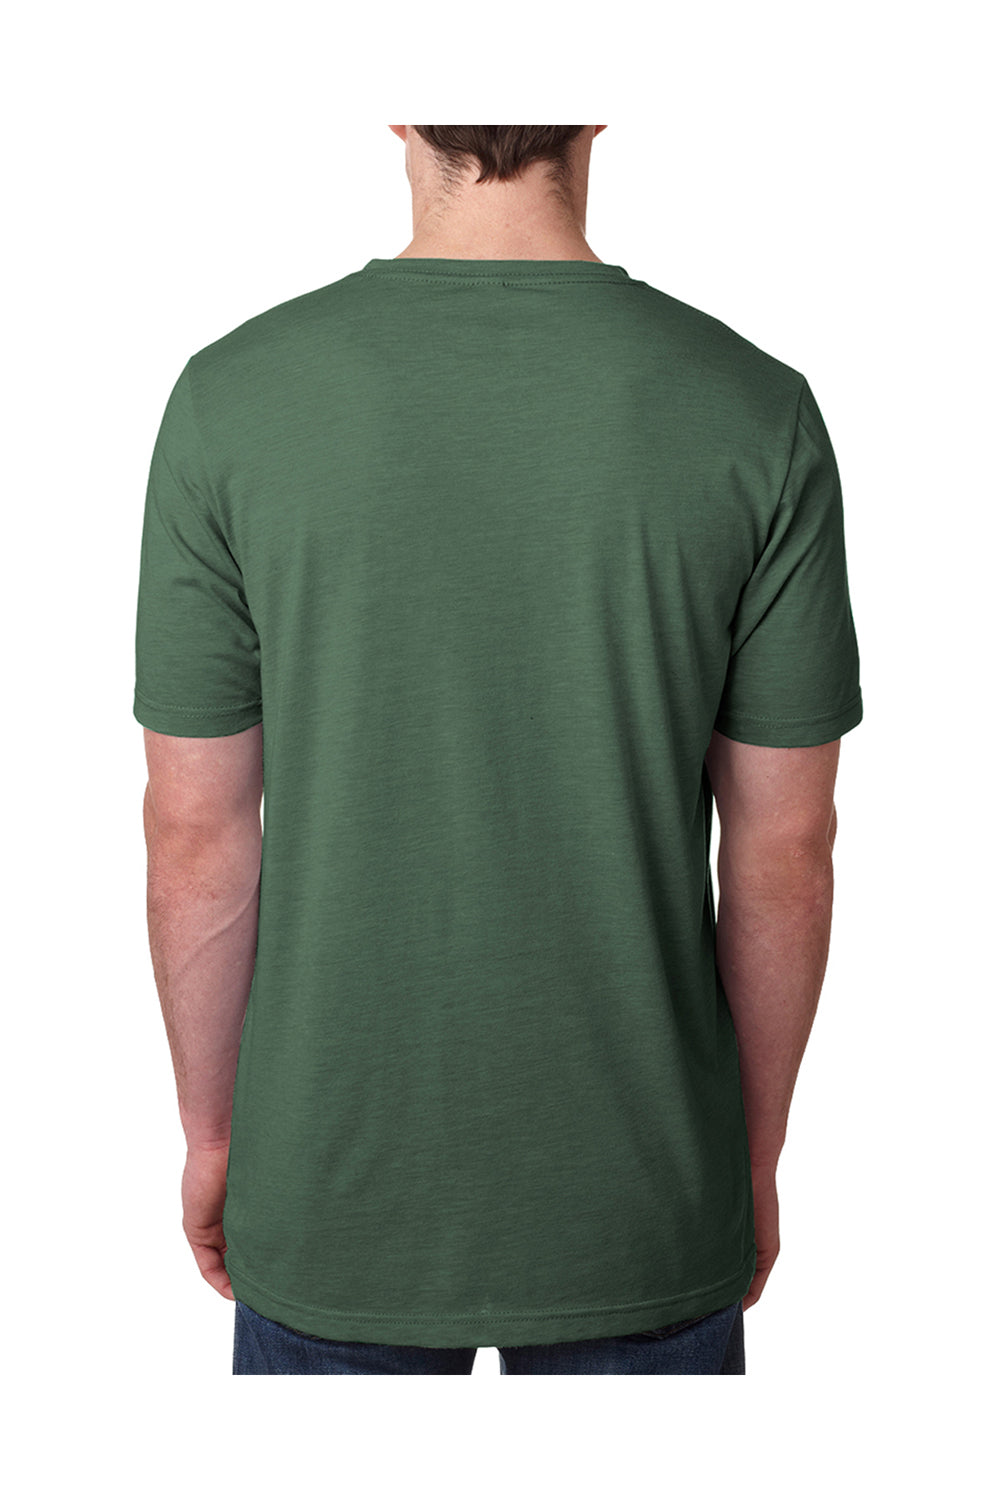 Next Level 6200 Mens Jersey Short Sleeve Crewneck T-Shirt Pine Green Back